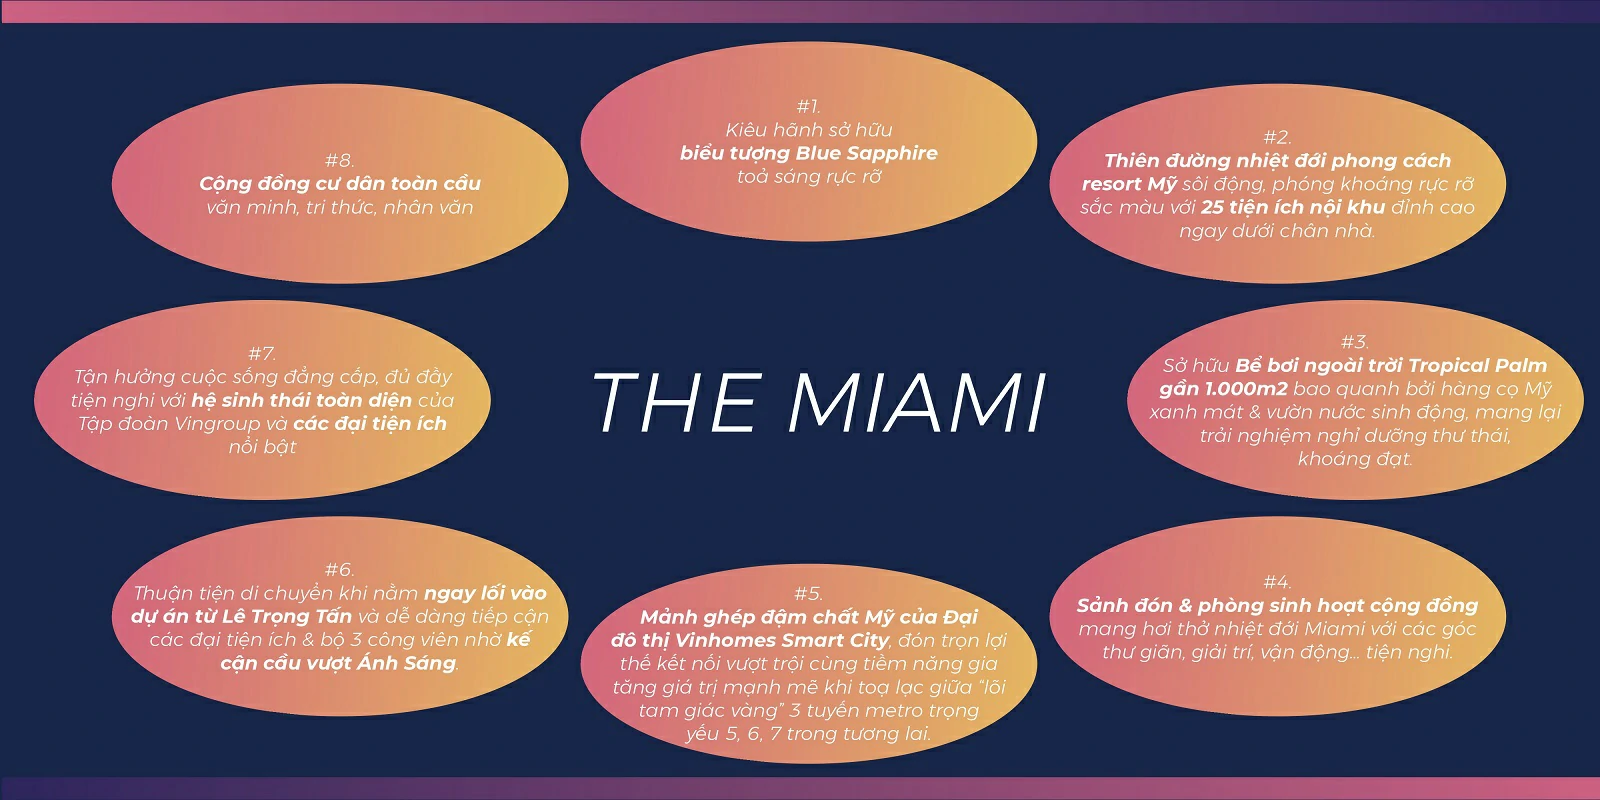 Lý do nên chọn The Miami Vinhomes Smart City